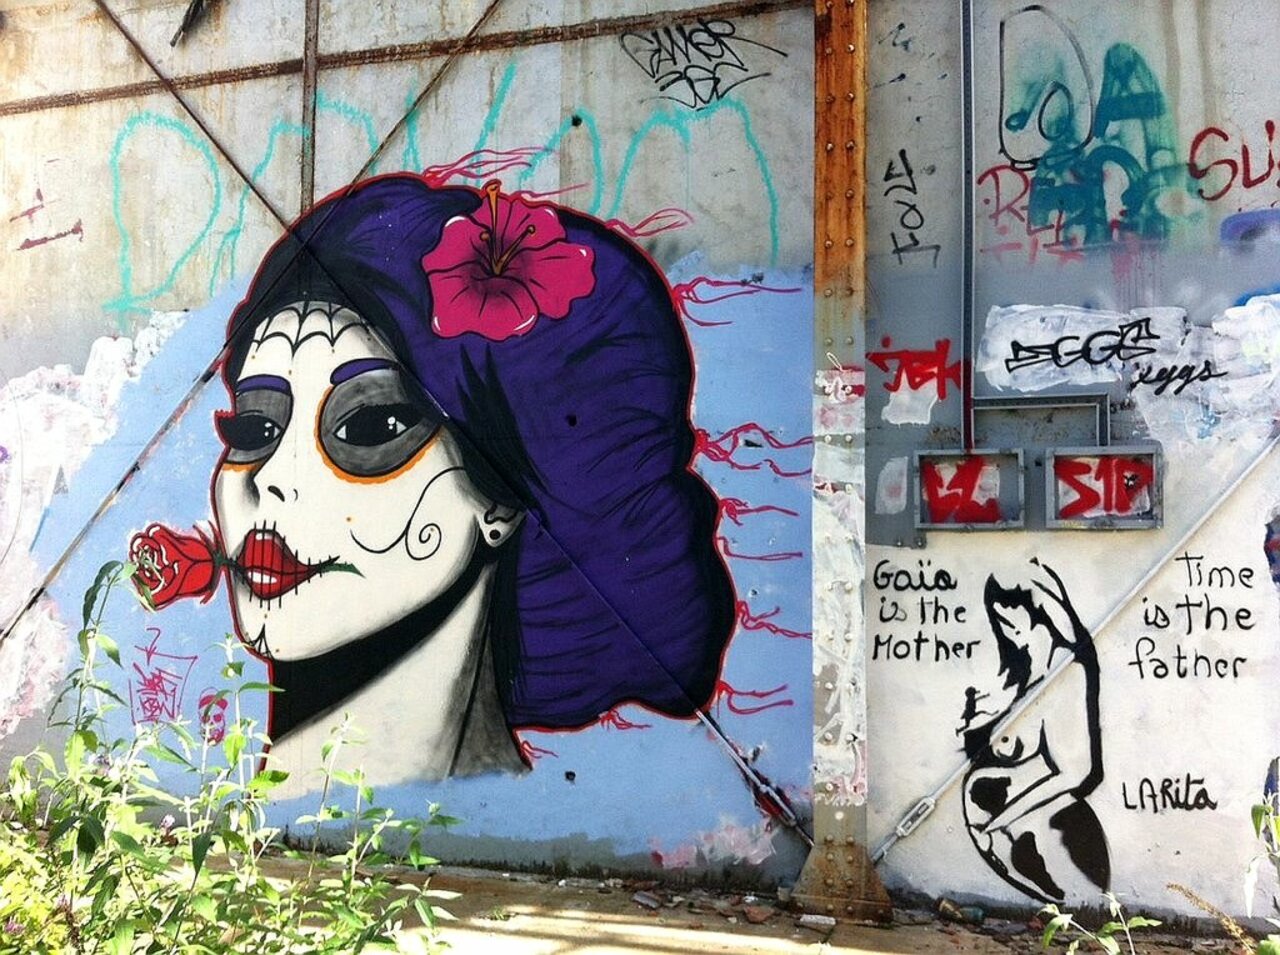 RT @urbacolors: Street Art by Mr Guilty in #Bordeaux http://www.urbacolors.com #art #mural #graffiti #streetart https://t.co/9nSMg19cHZ